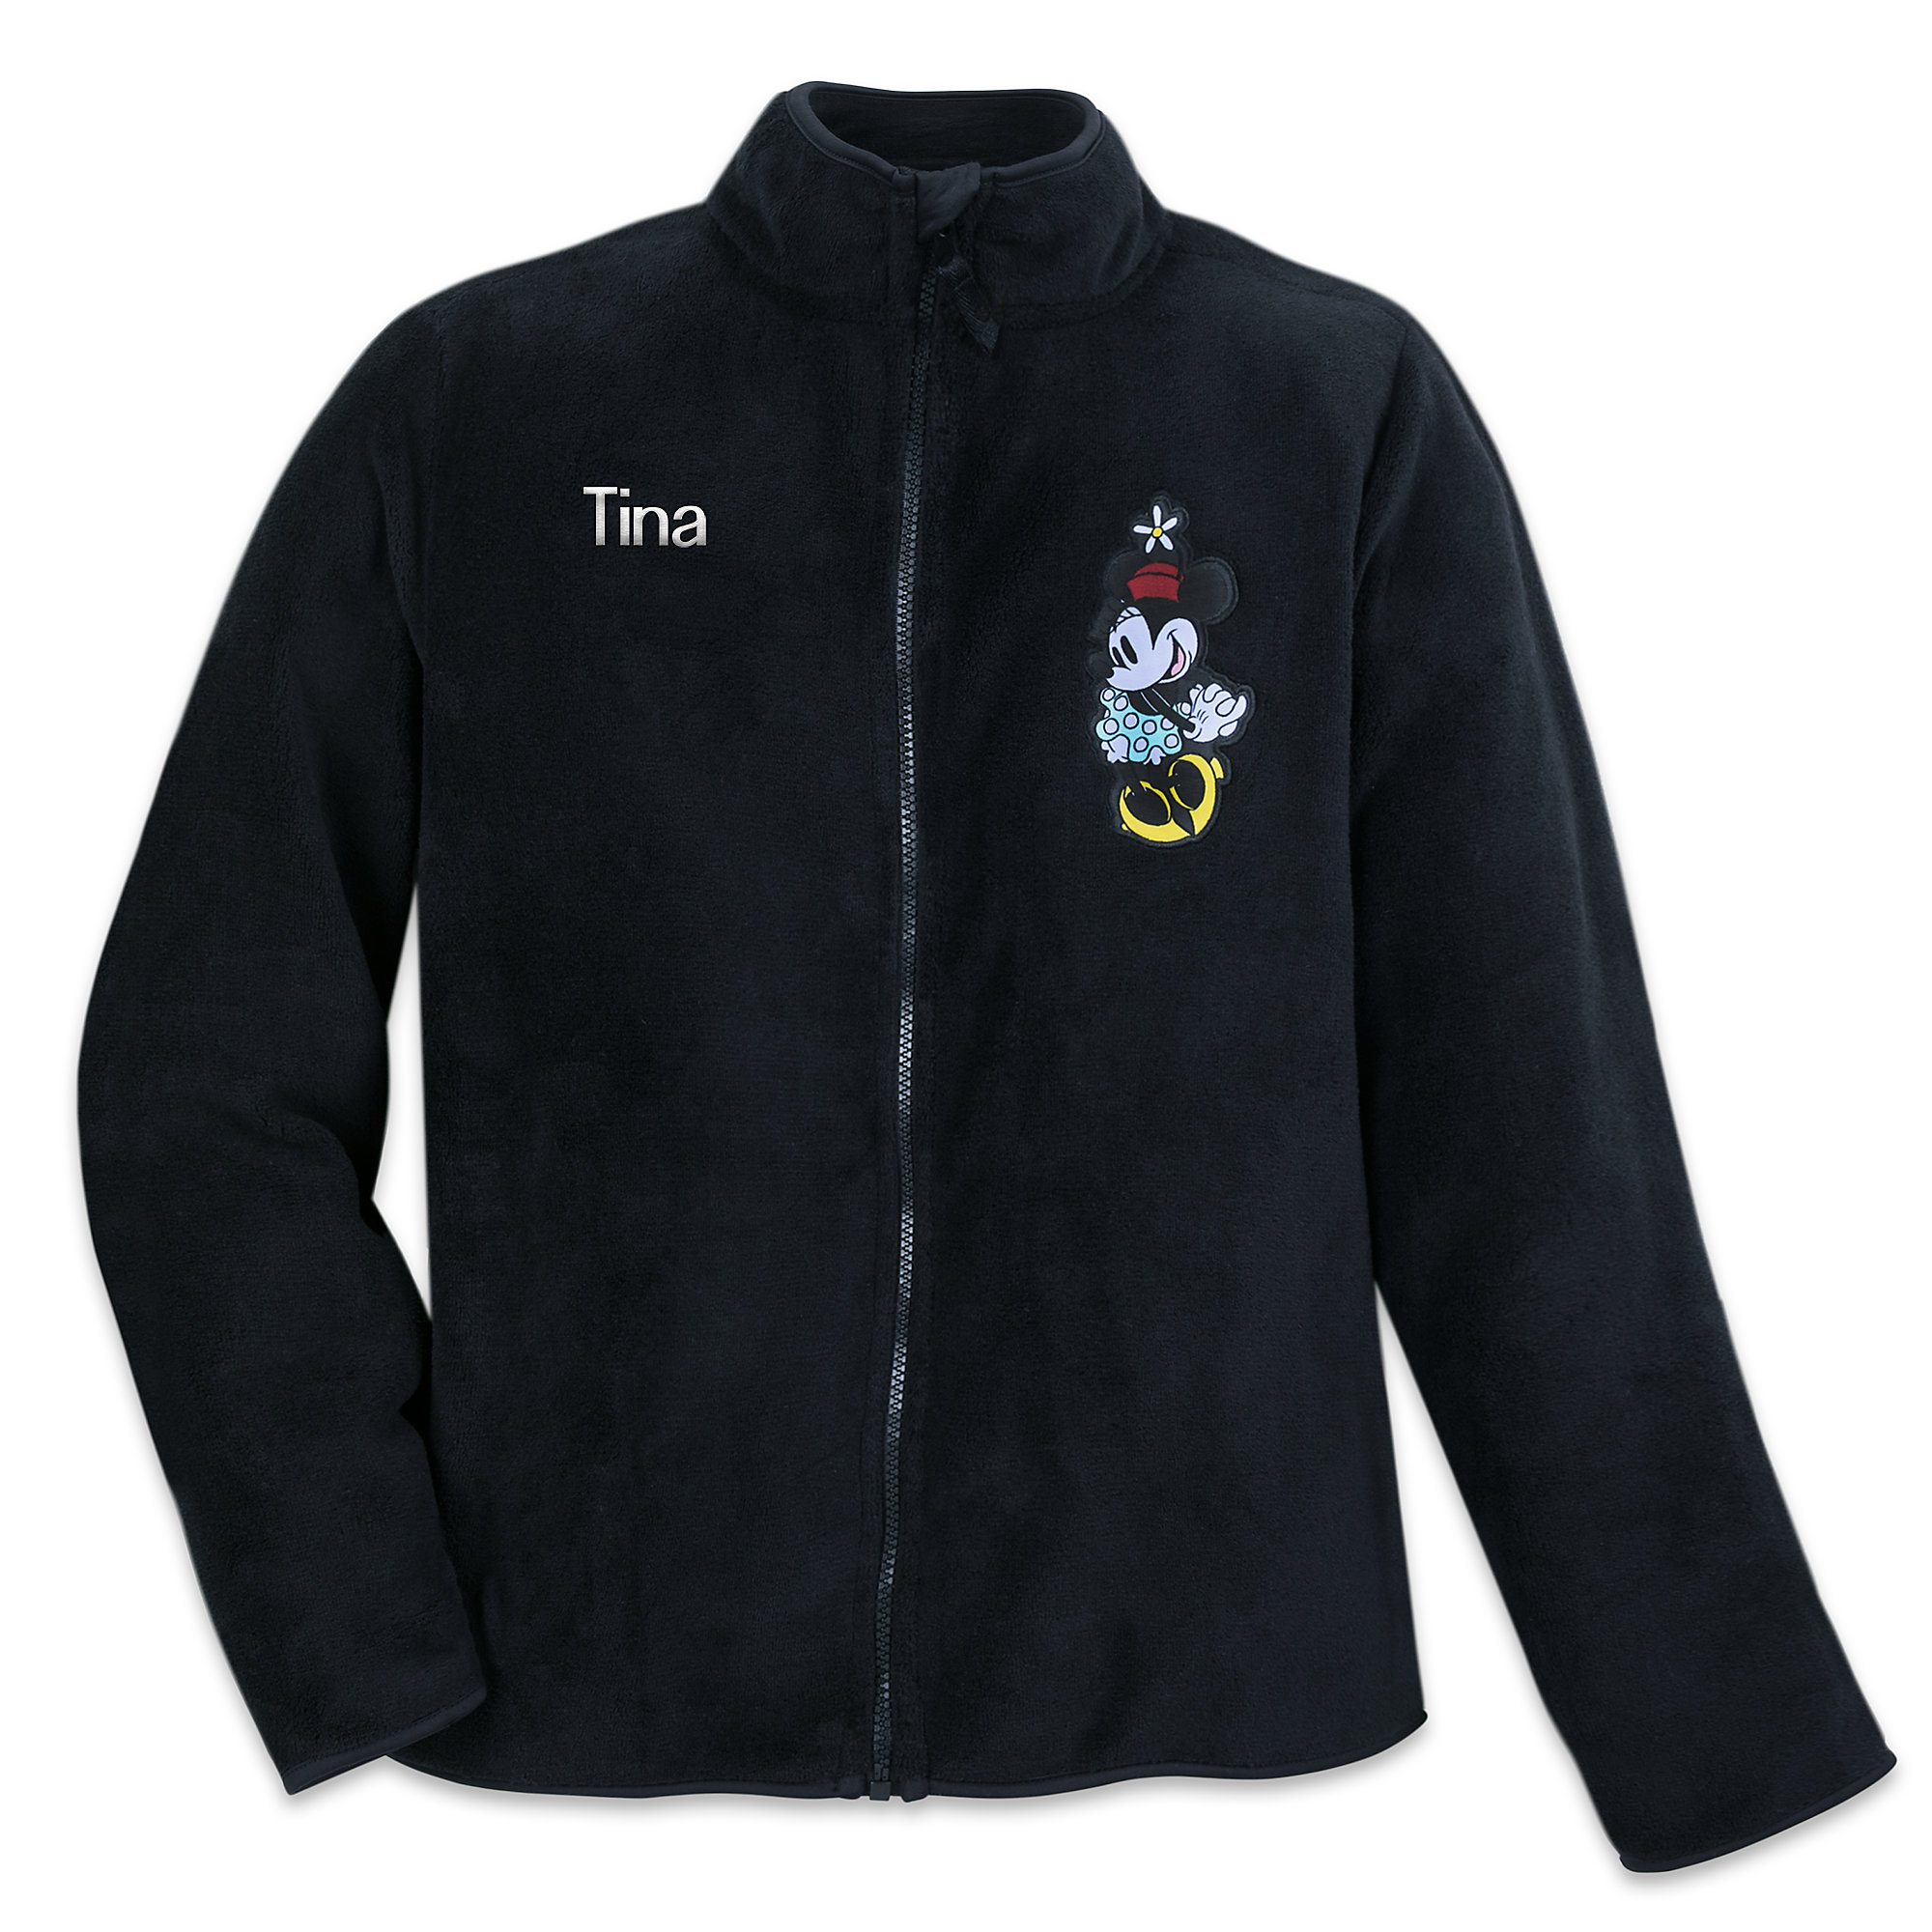 Minnie Mouse Zip Fleece Jacket for Women - Personalizable